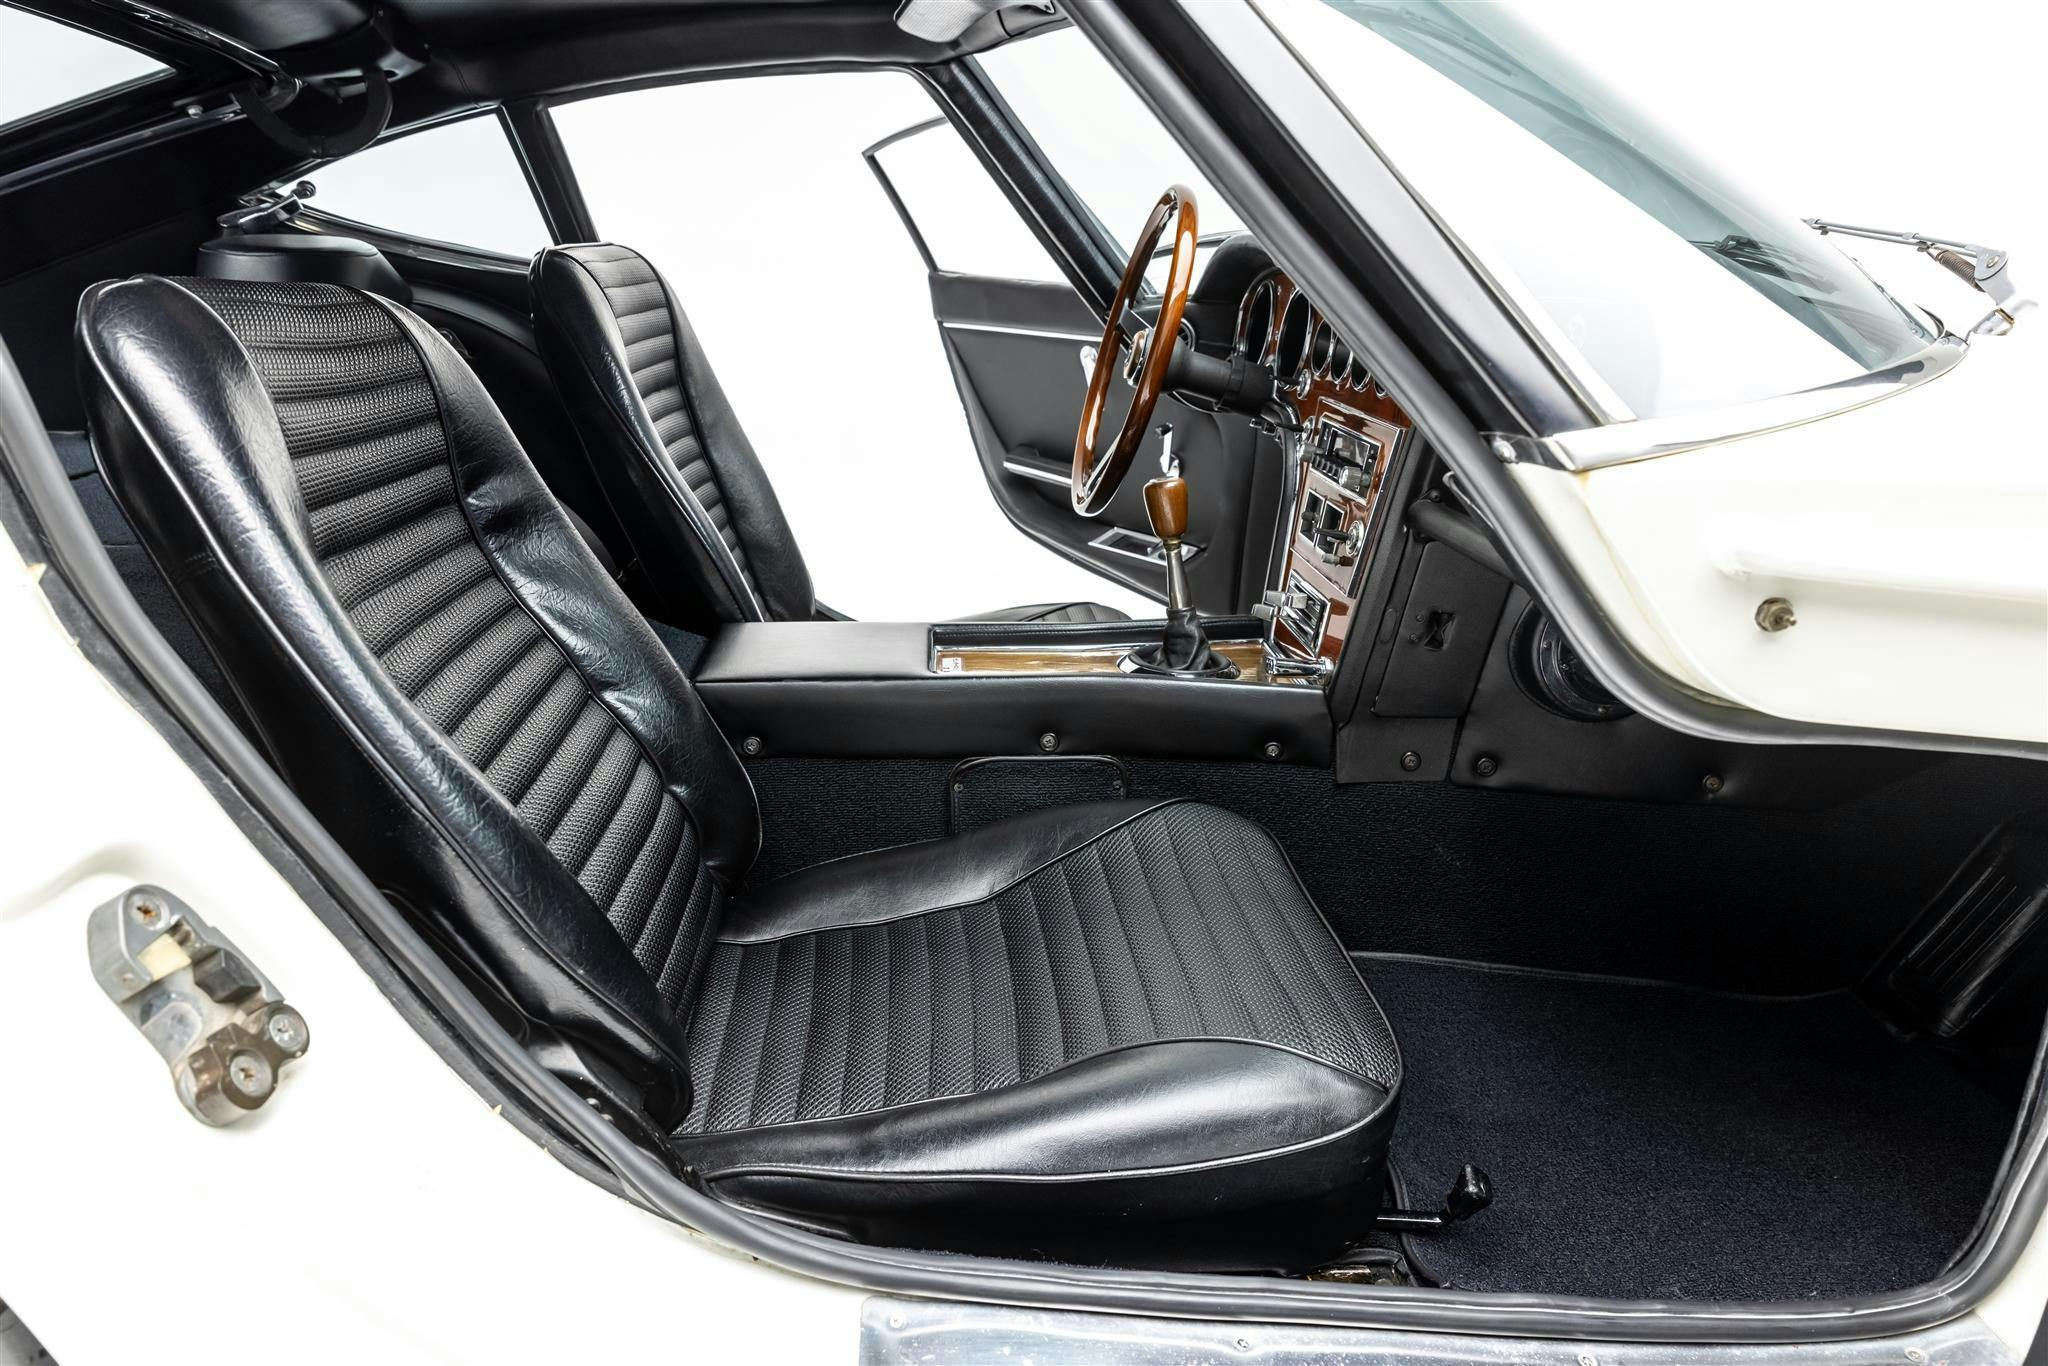 1968 Toyota 2000GT interior side